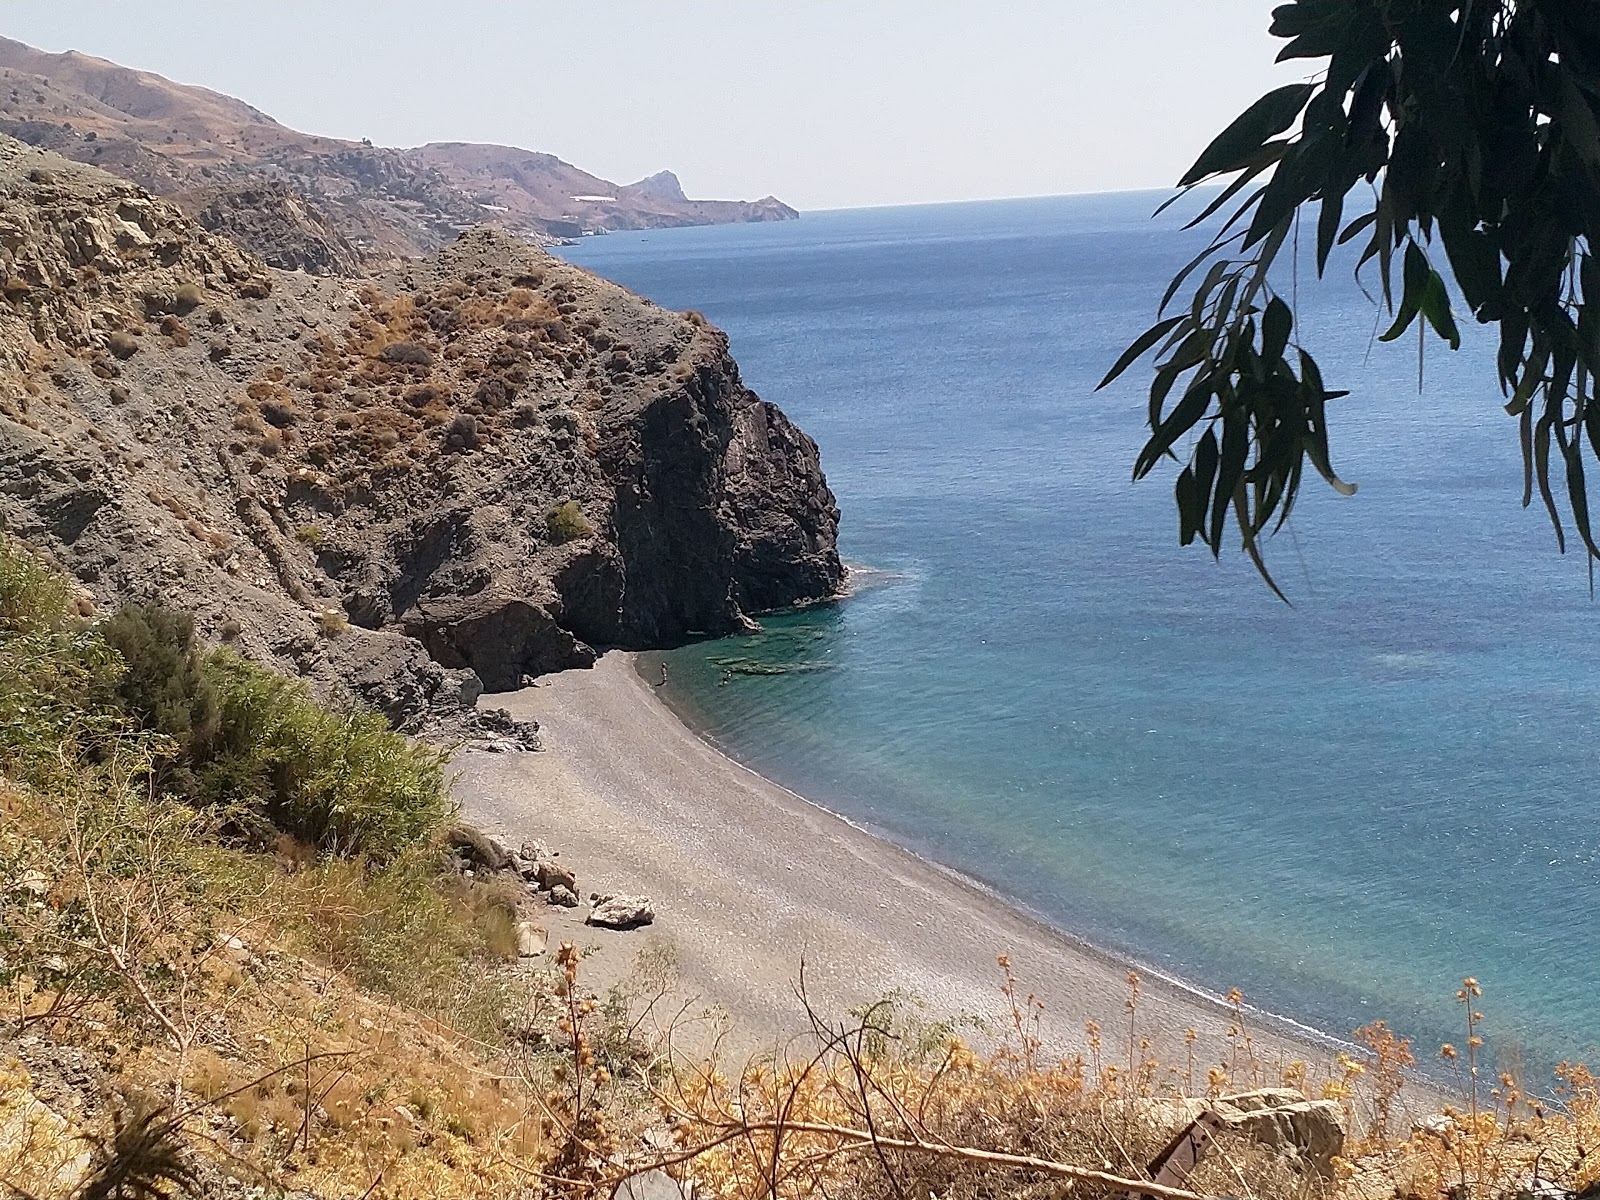 Fotografija Maha beach z sivi kamenček površino